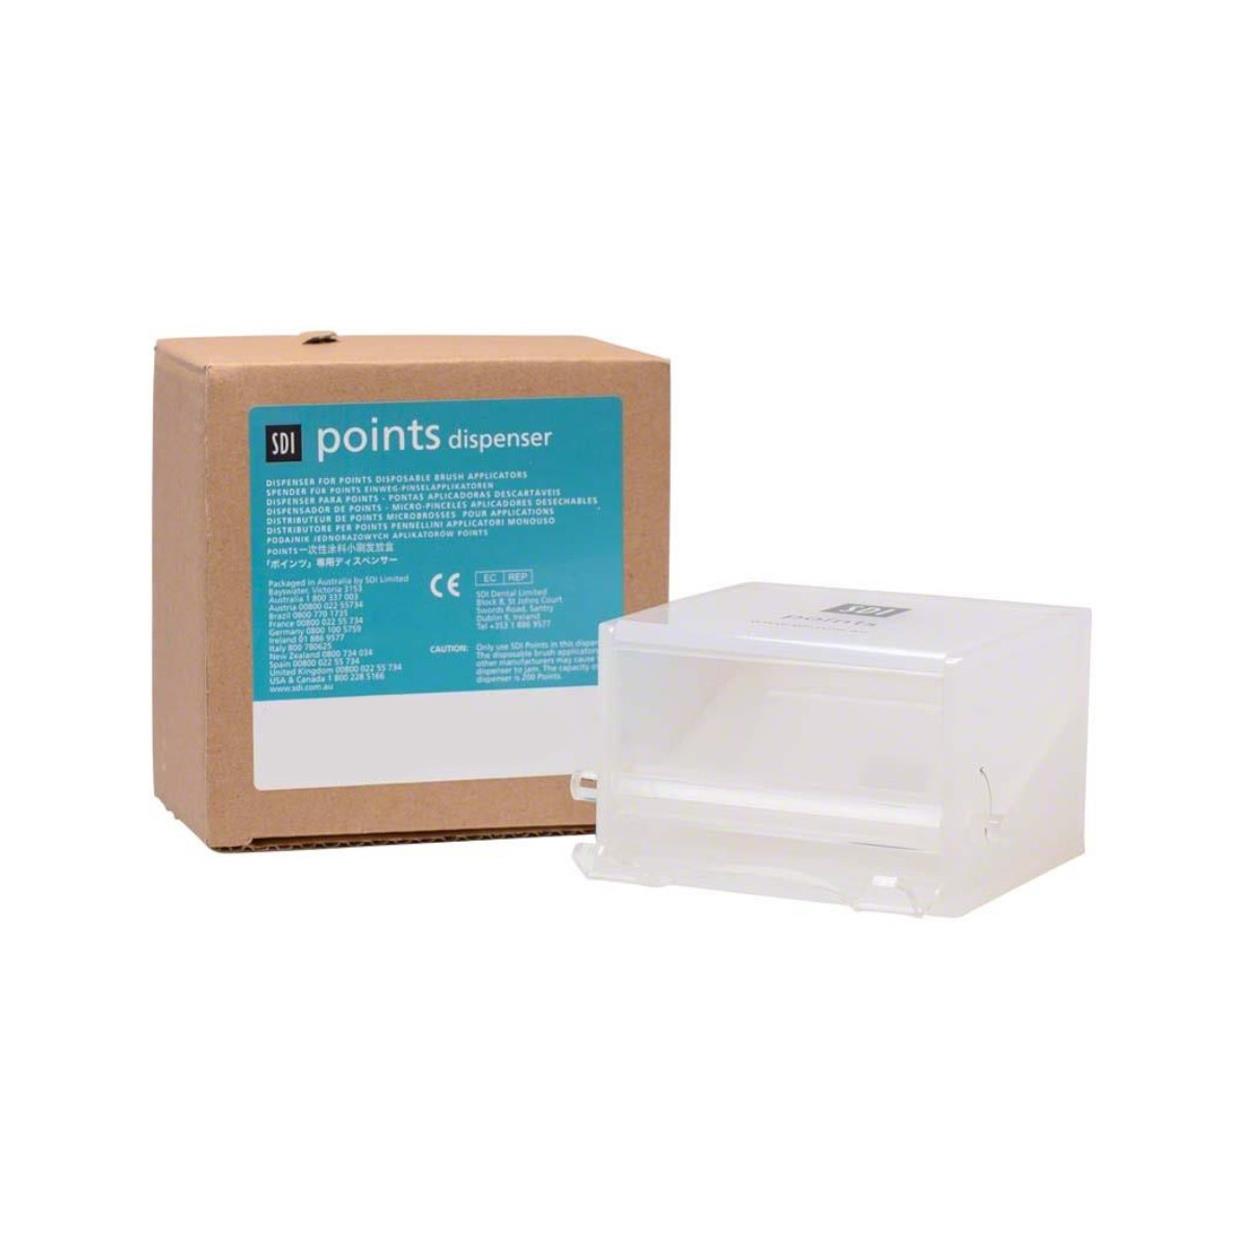 DentrealStore - Sdi Dental Points Dispenser Box - Adhesive Aplicators Tips